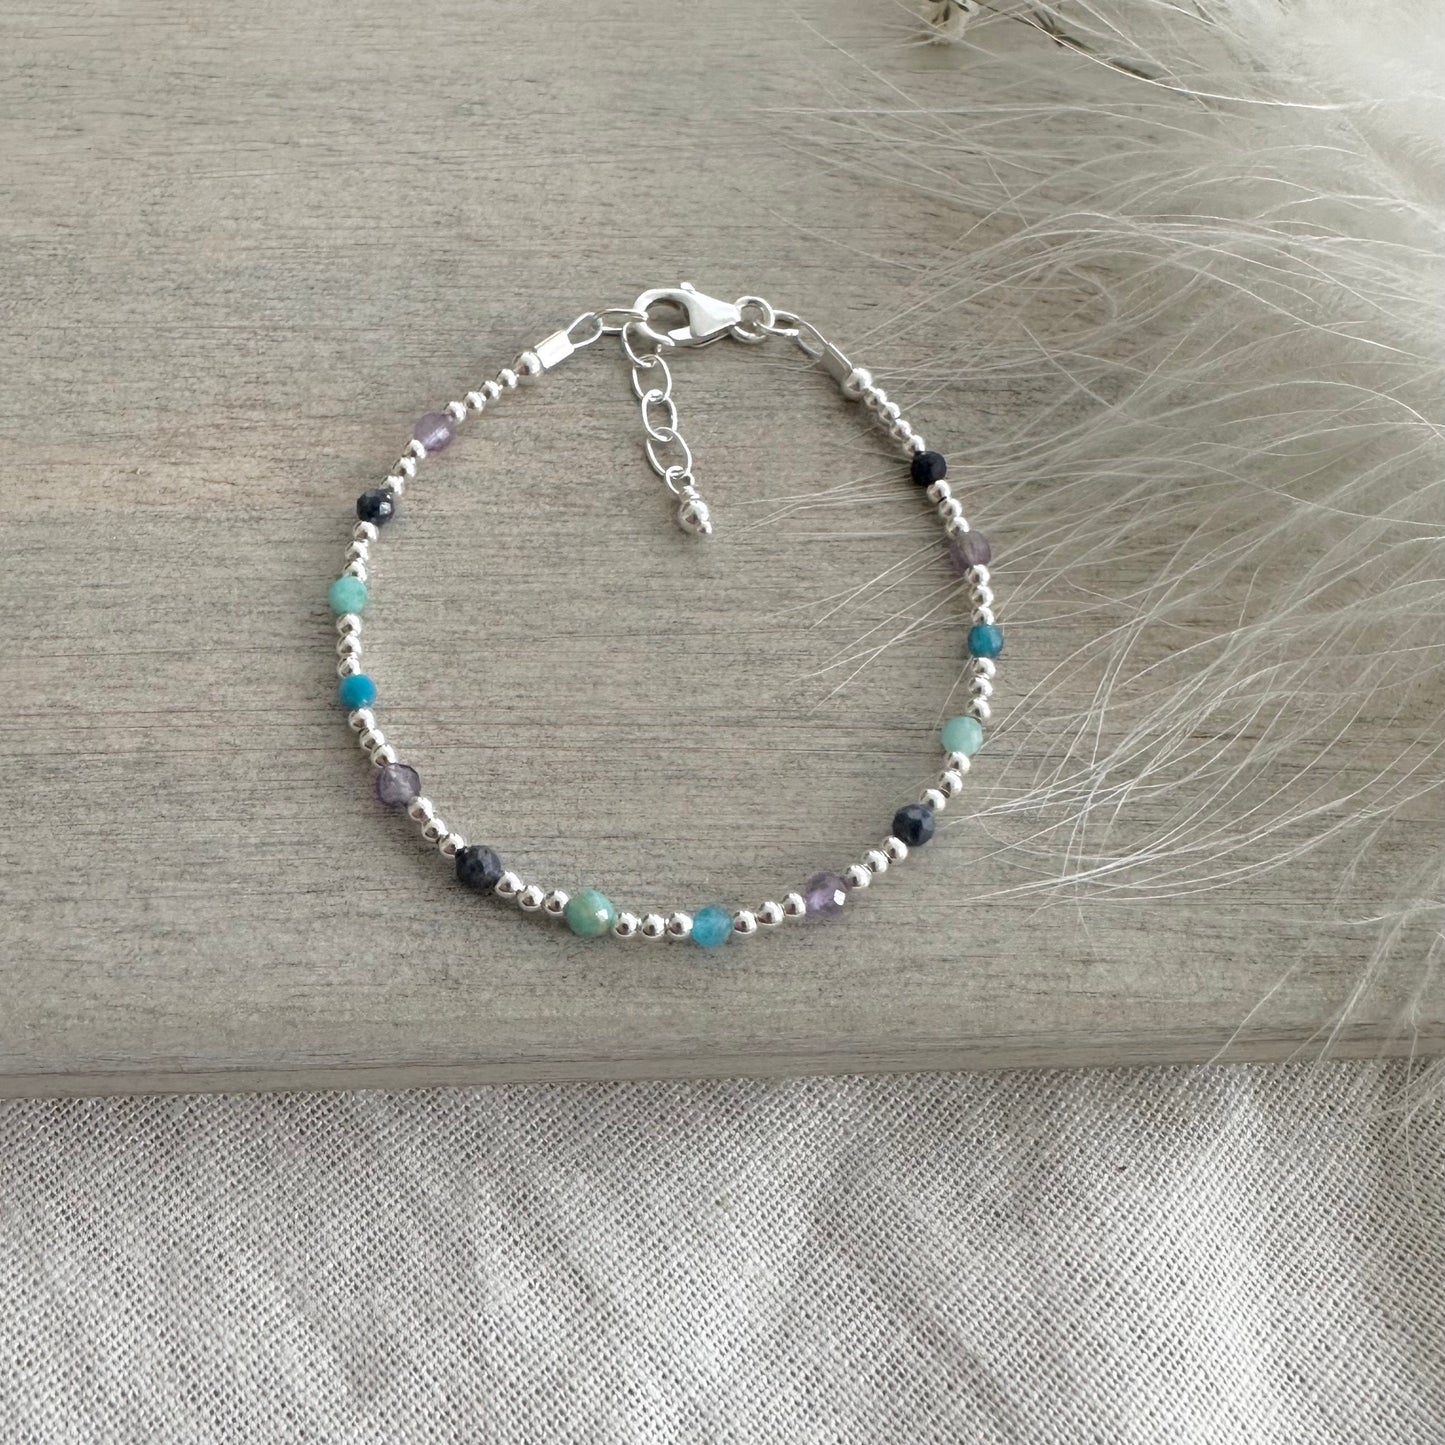 Gemstone bracelet for summer with dainty gemstones and sterling silver, colourful bracelet for summer holidays